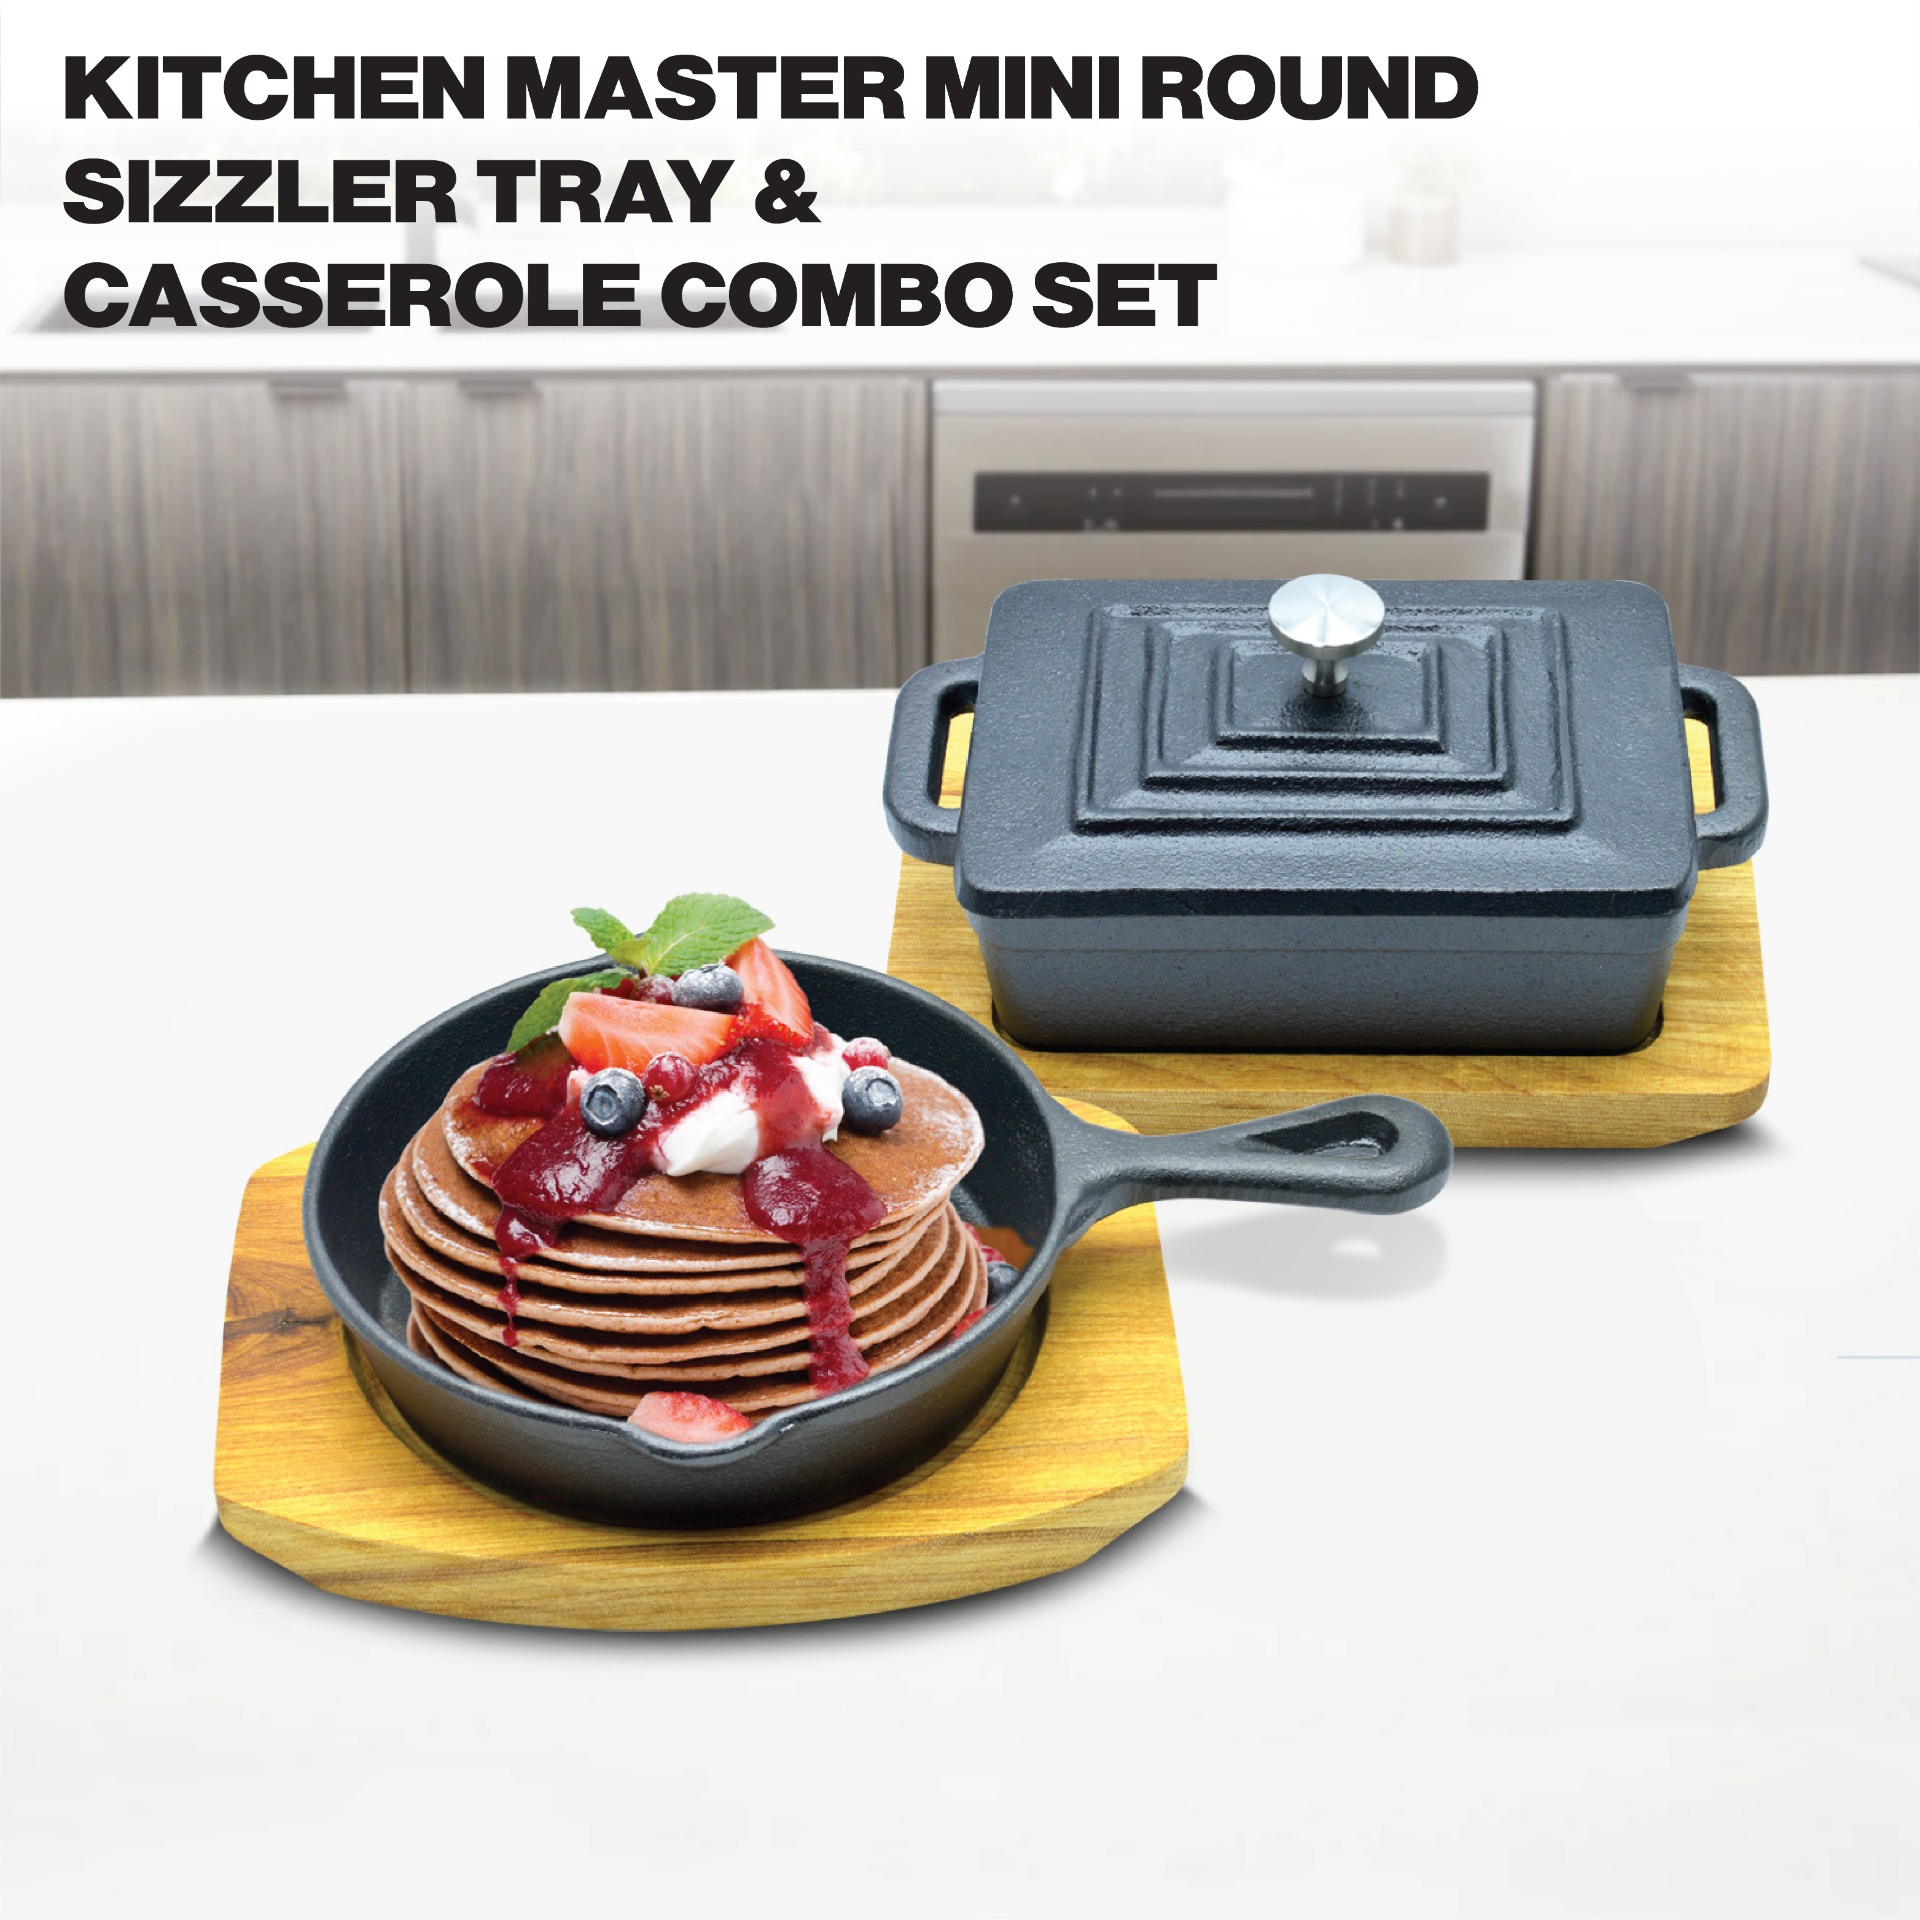 Kitchen Master Mini Round Sizzler Tray and Casserole Combo Set